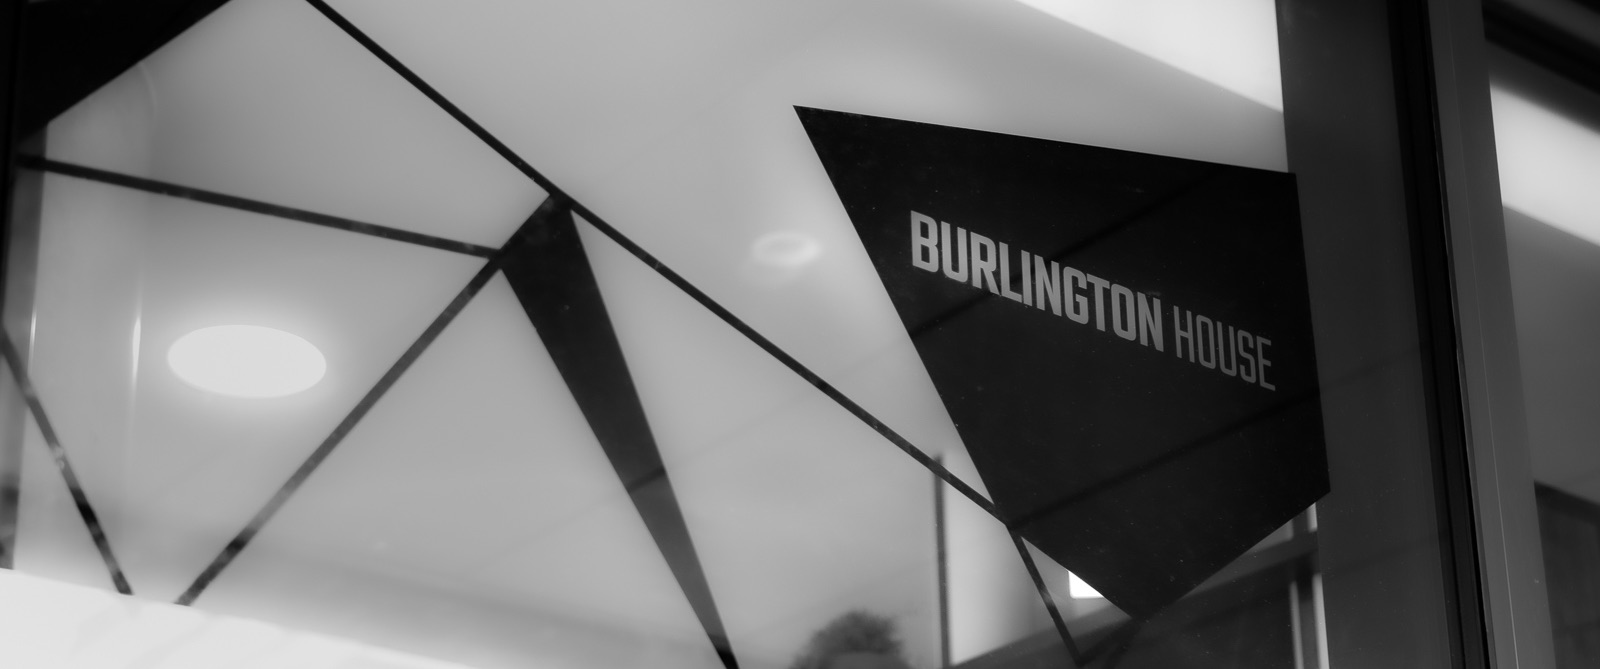 Burlington House Logo sign